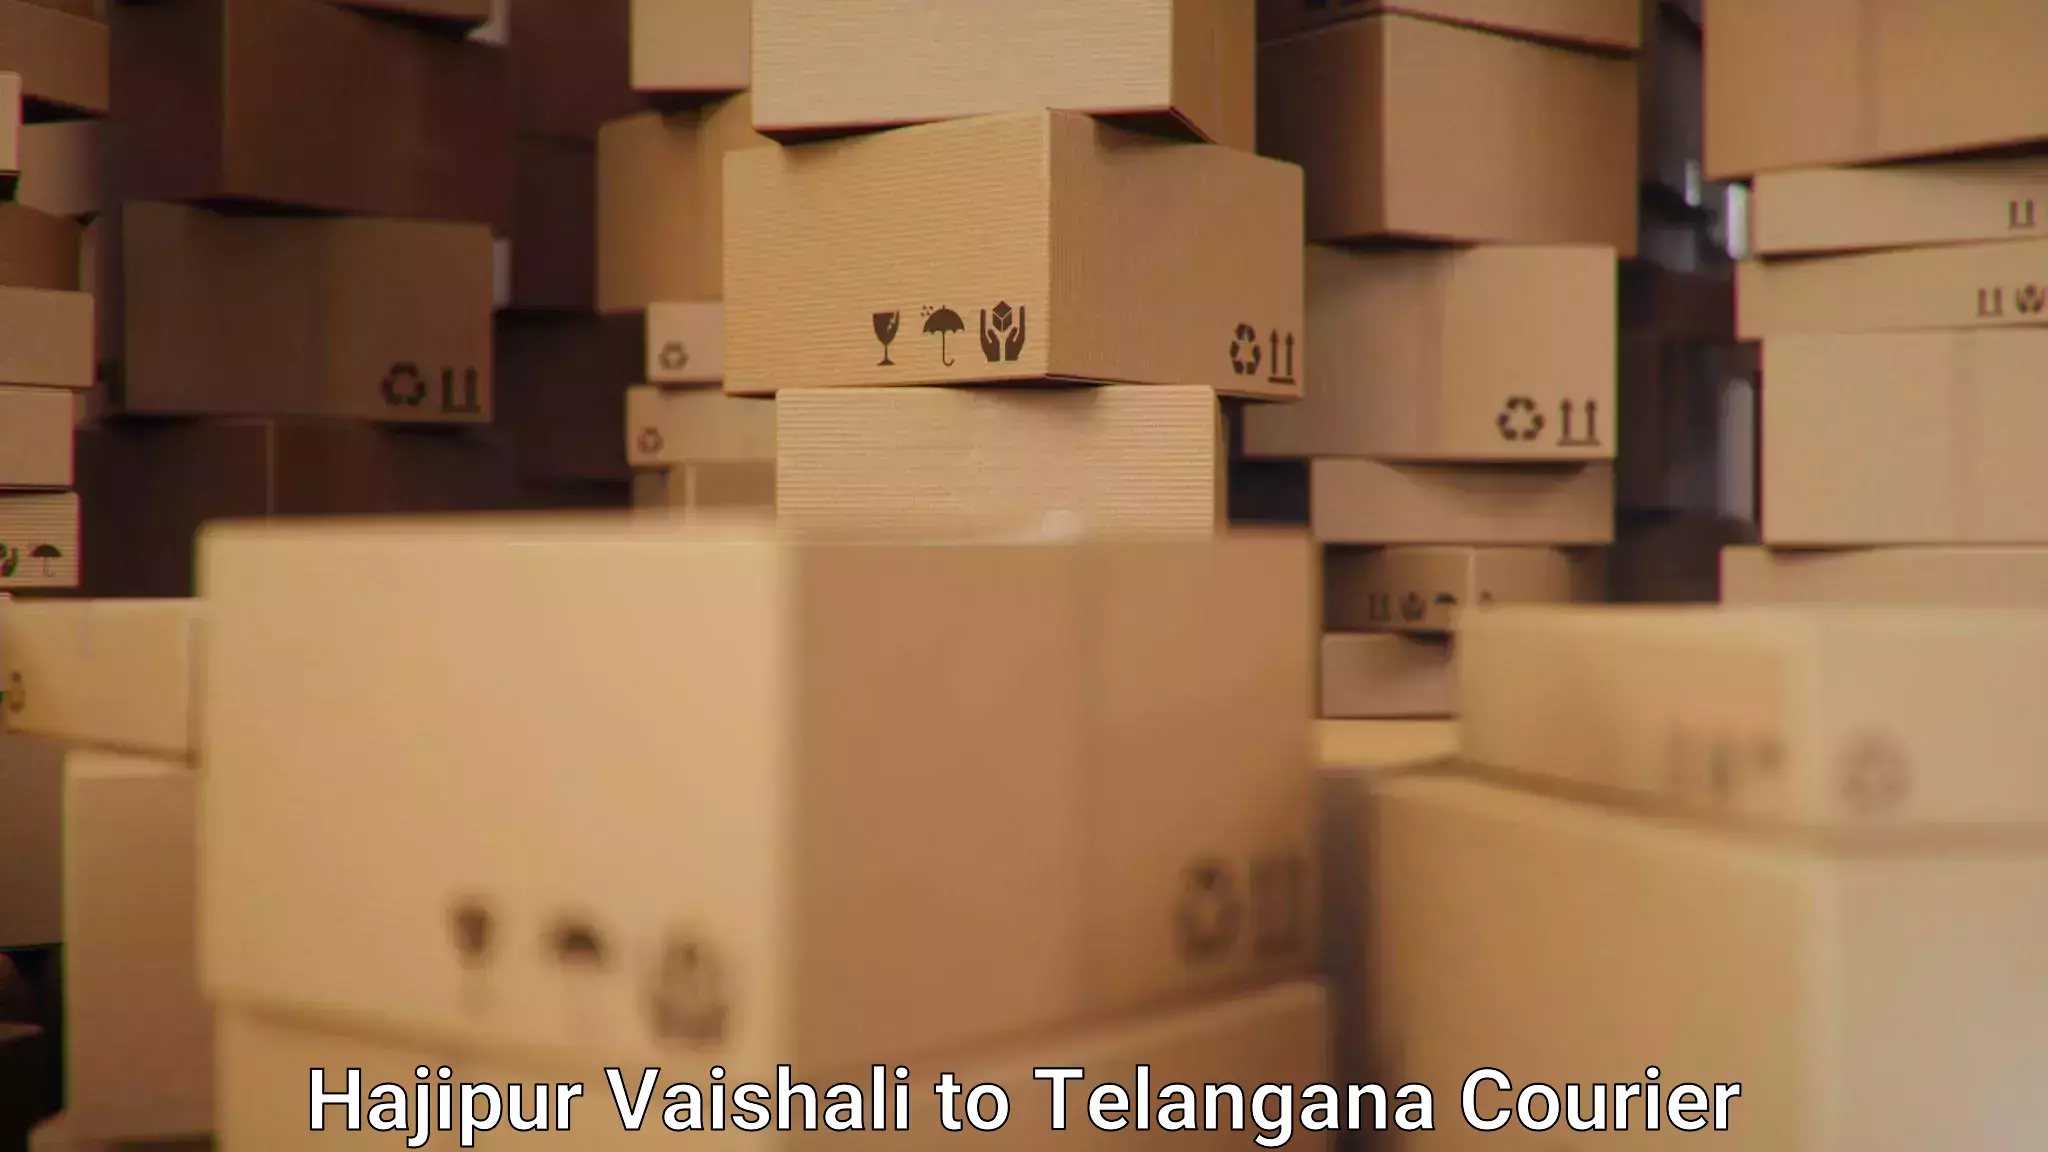 Pharmaceutical courier Hajipur Vaishali to Hyderabad